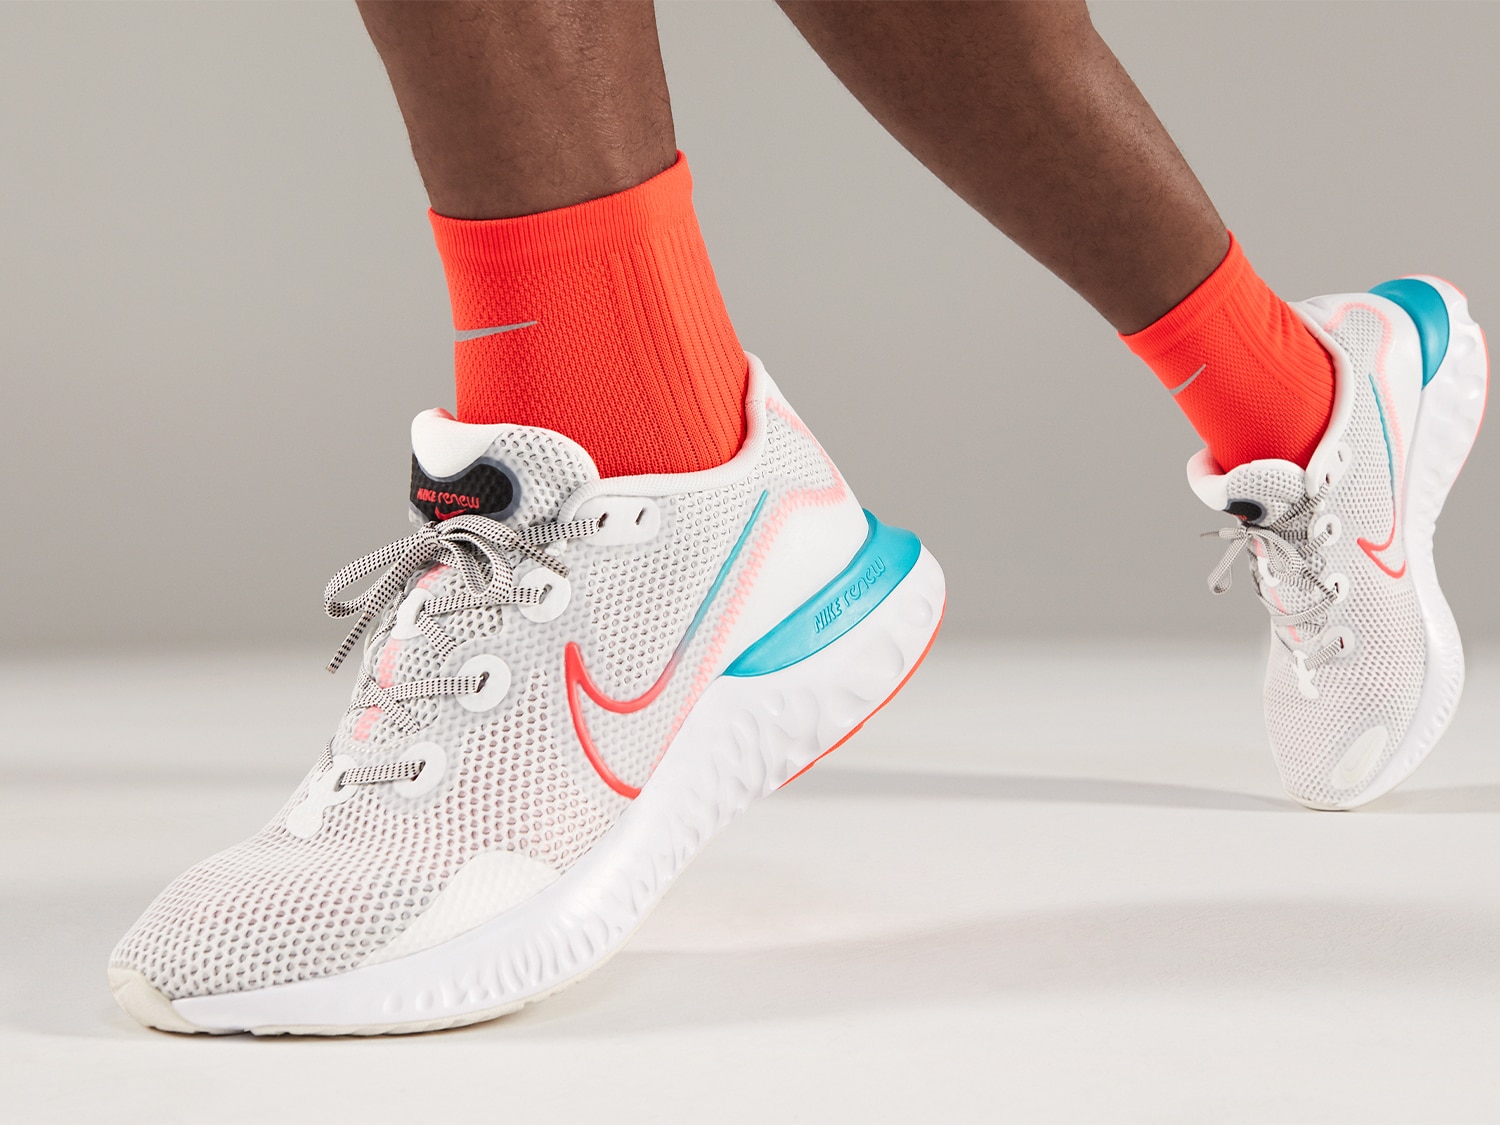 Nike Renew Run Running Shoe - Men's | DSW